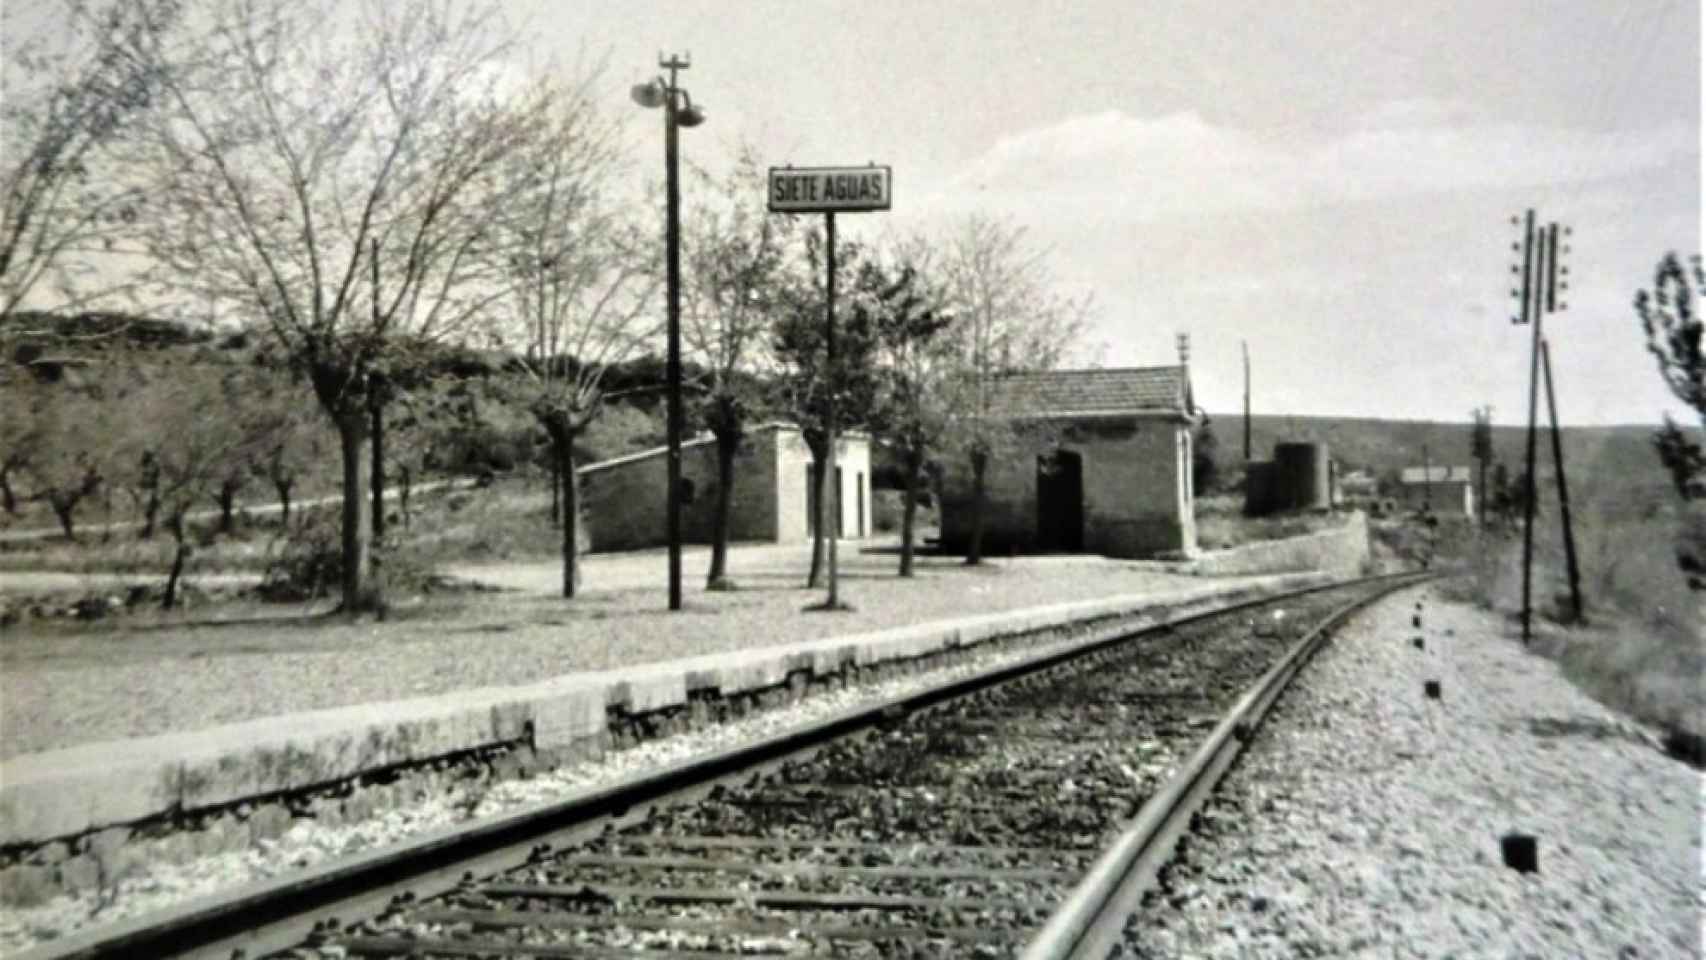 Estación ferroviaria Siete Aguas